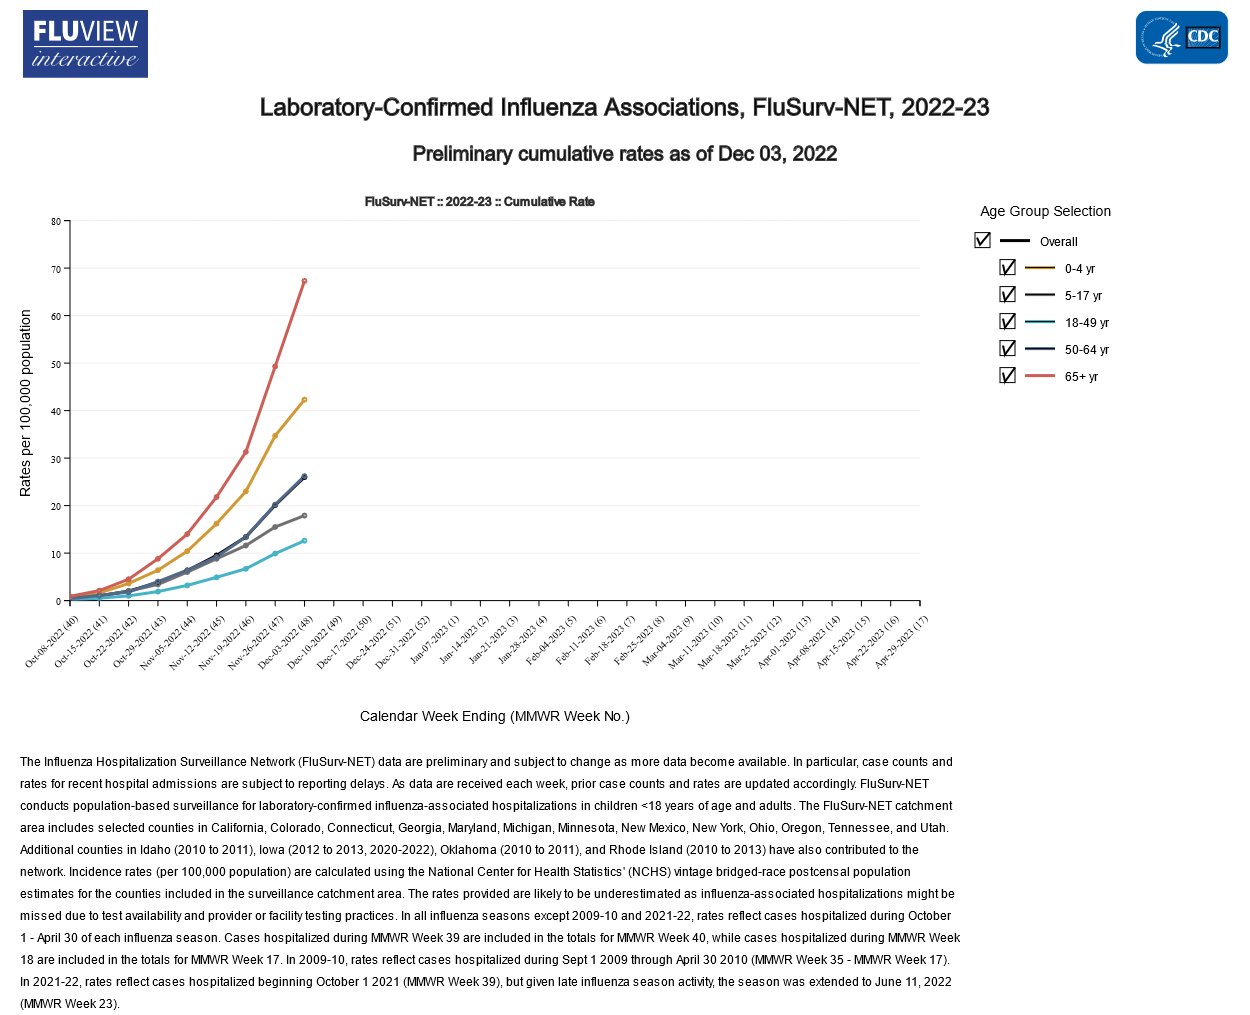 Rates of Influenza Hospitalization Preliminary cumulative rates as of Dec 03, 2022